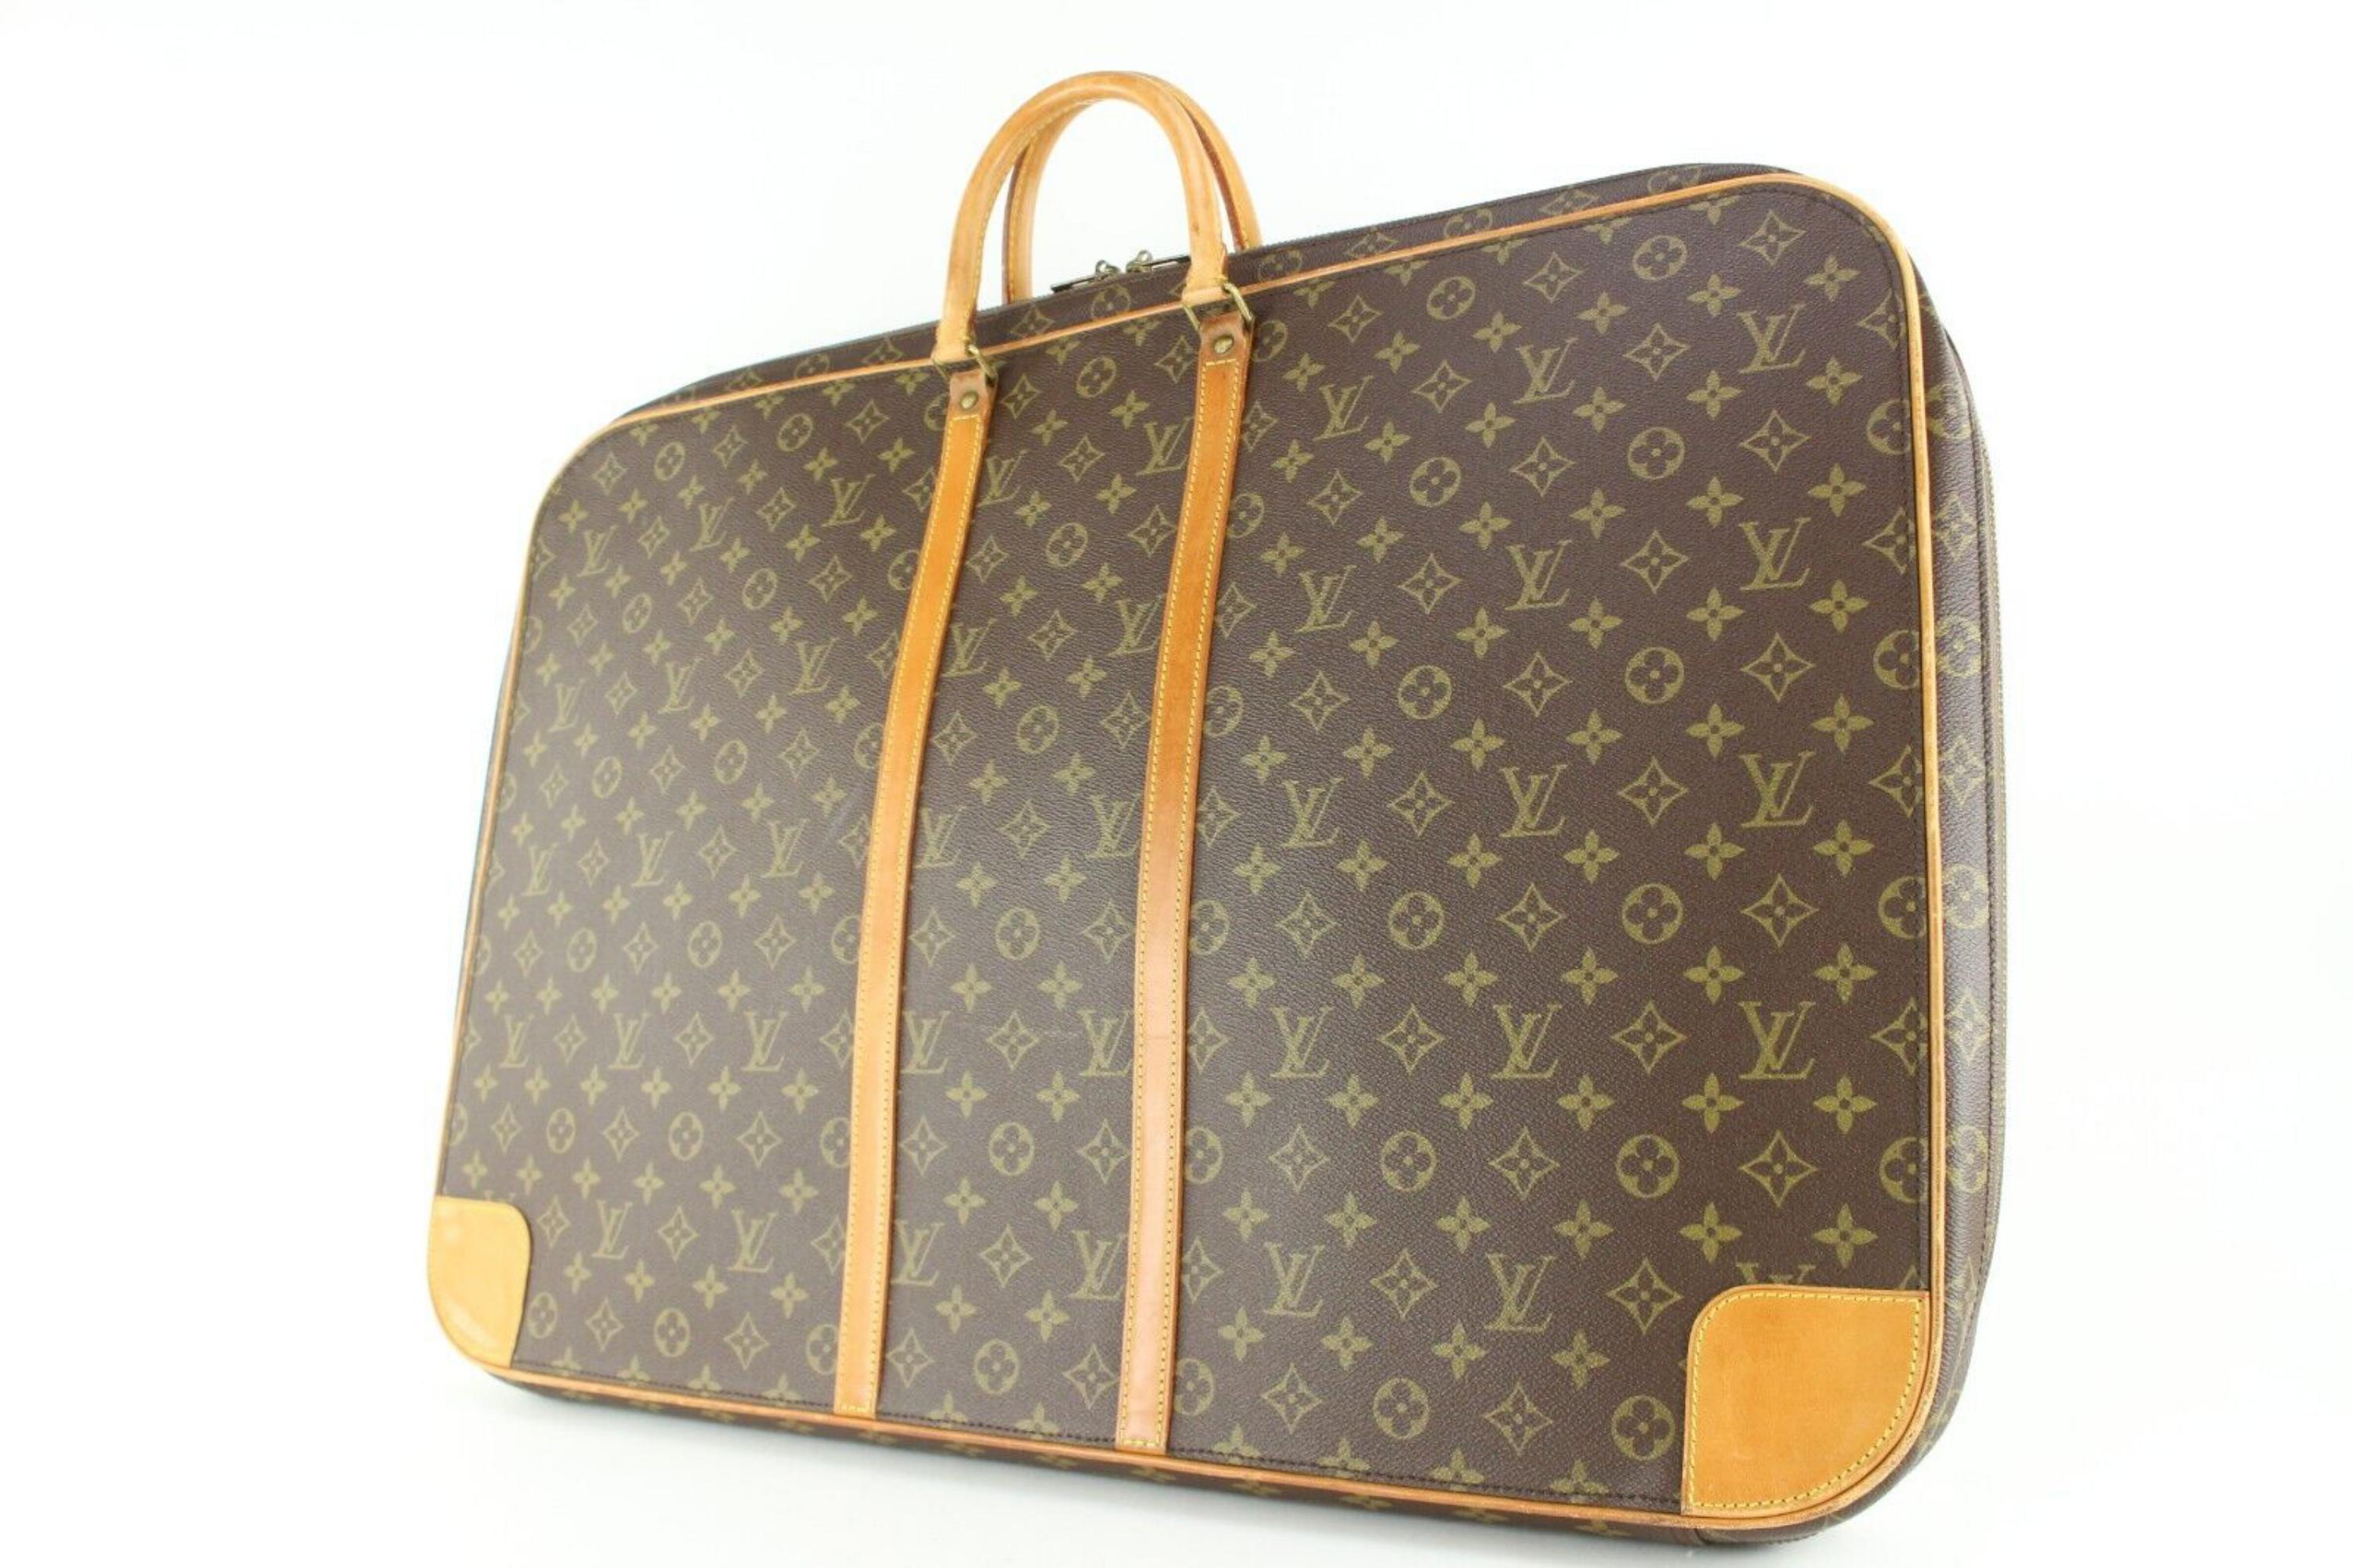 Louis Vuitton Rare Monogram Artwork Canvas Portfolio Suitcase Luggage 1LVJ0119 For Sale 4